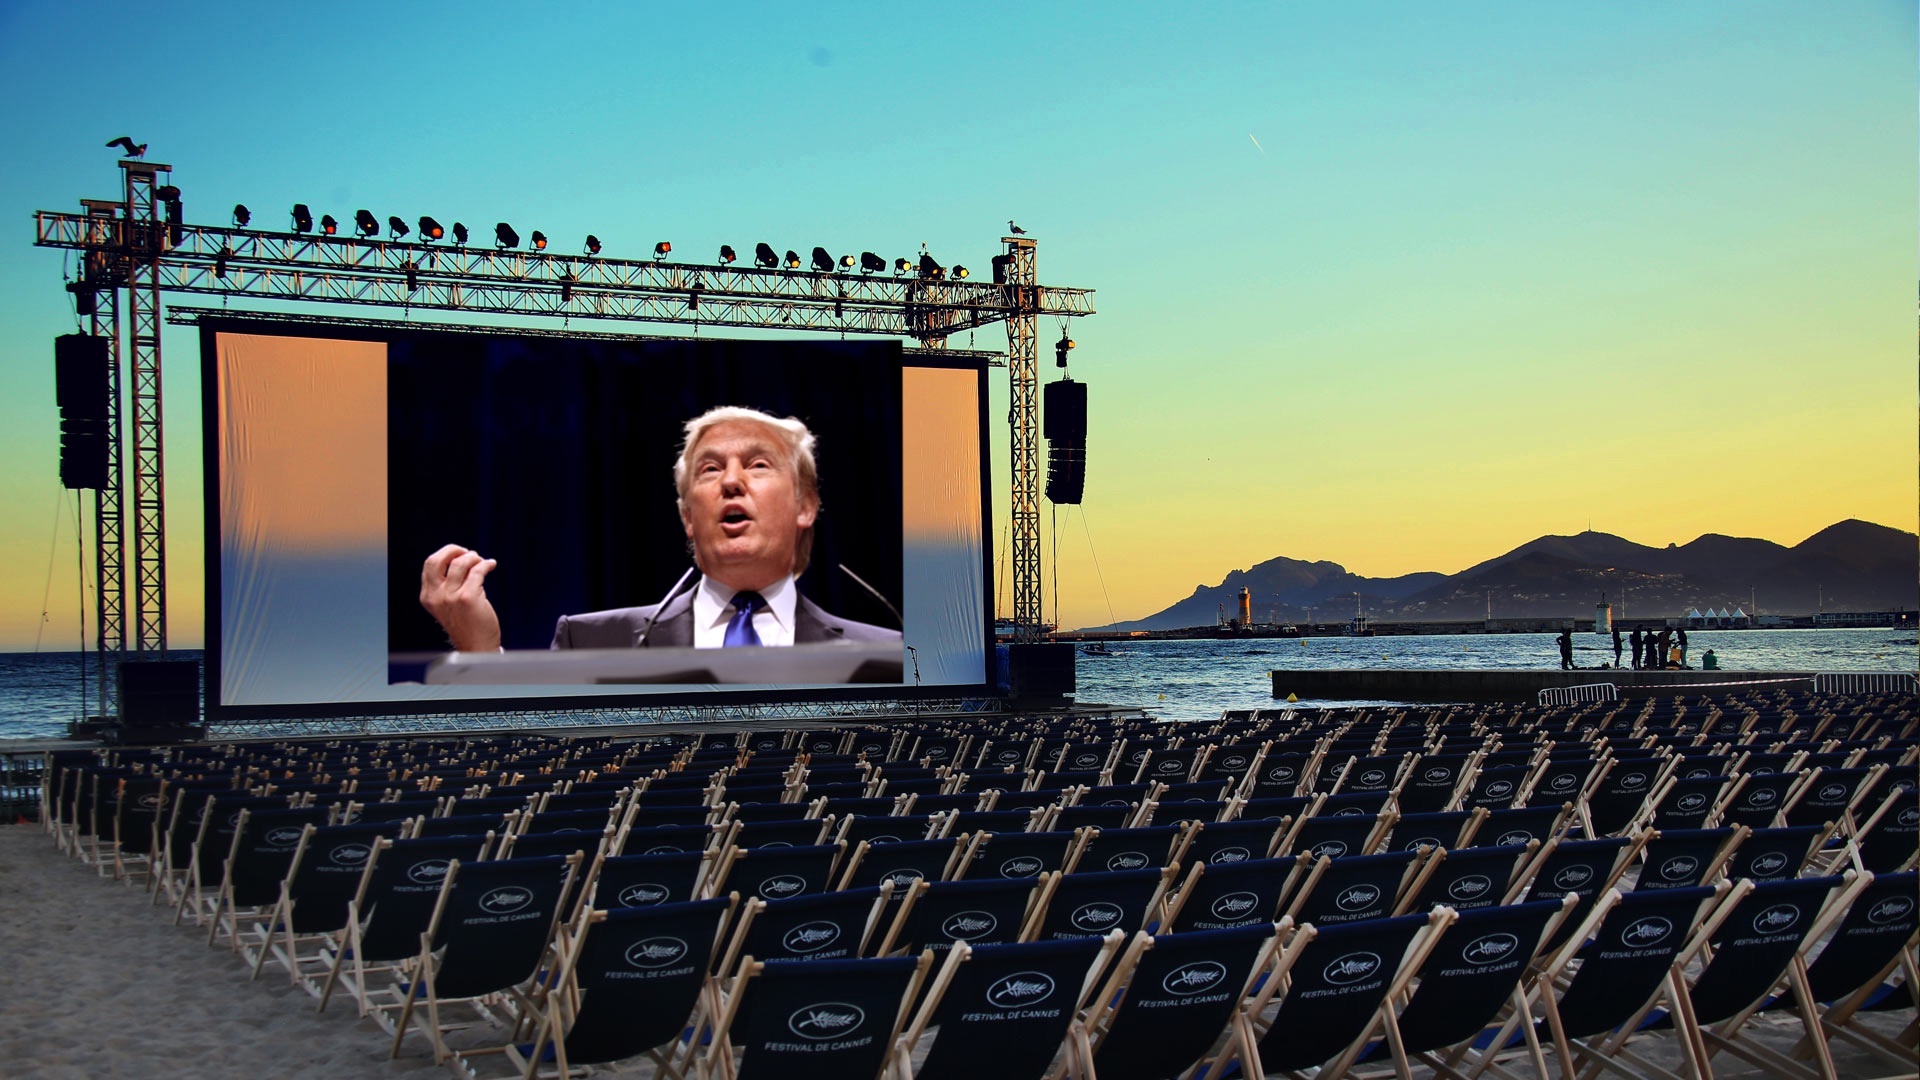 Trump Lawsuit Against Cannes Film Festival ‘The Apprentice’ Film, Alleged False Claims